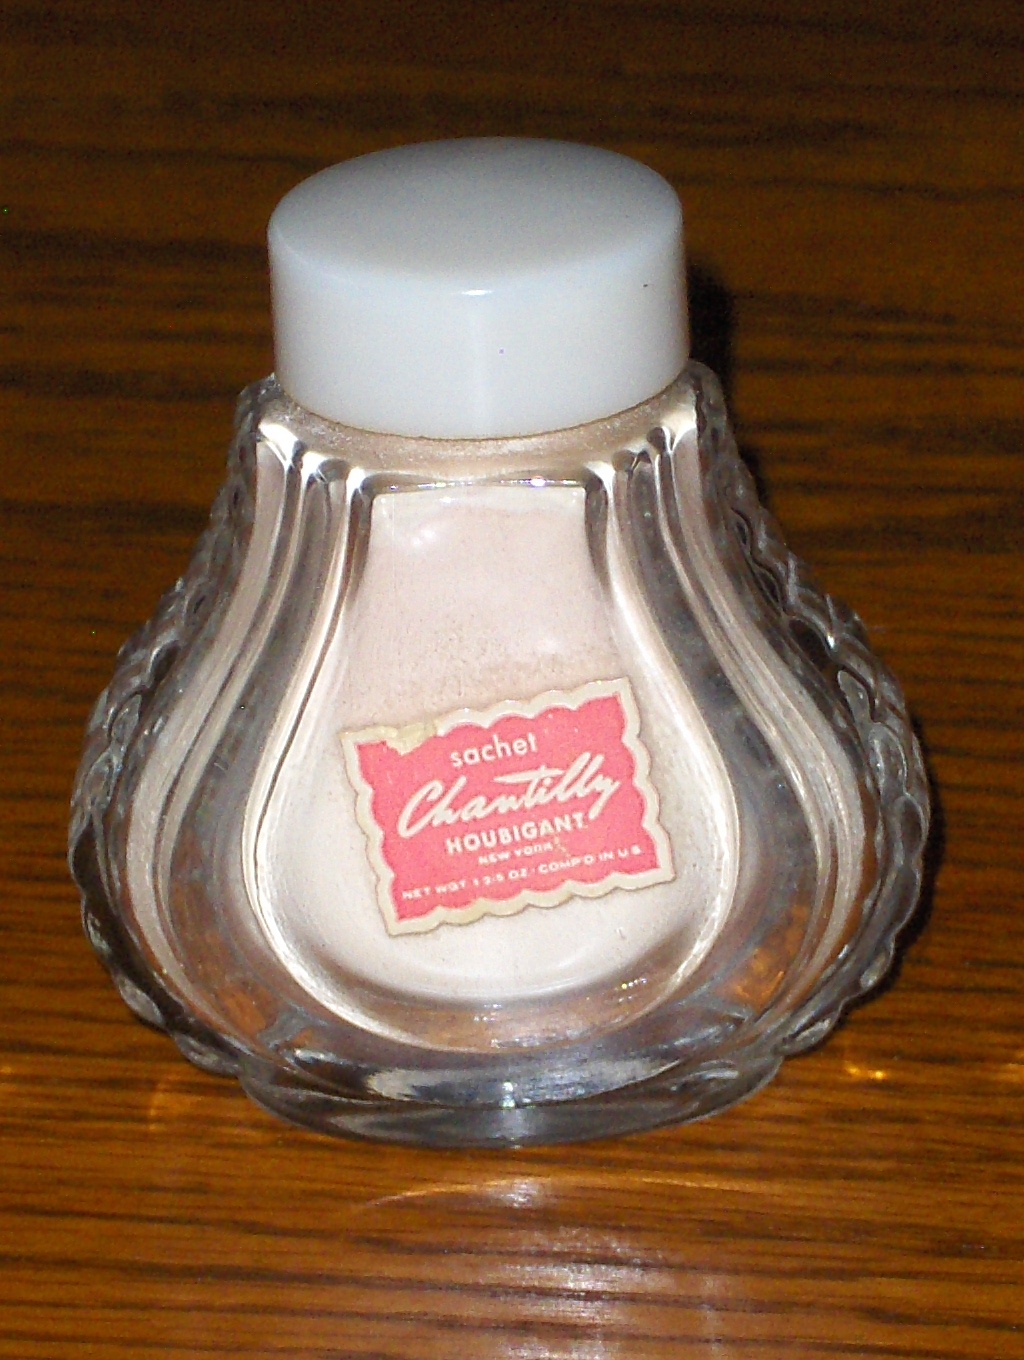 Chantilly Sachet Houbigant 1 2/5 oz Vintage Perfume Powder - $21.99